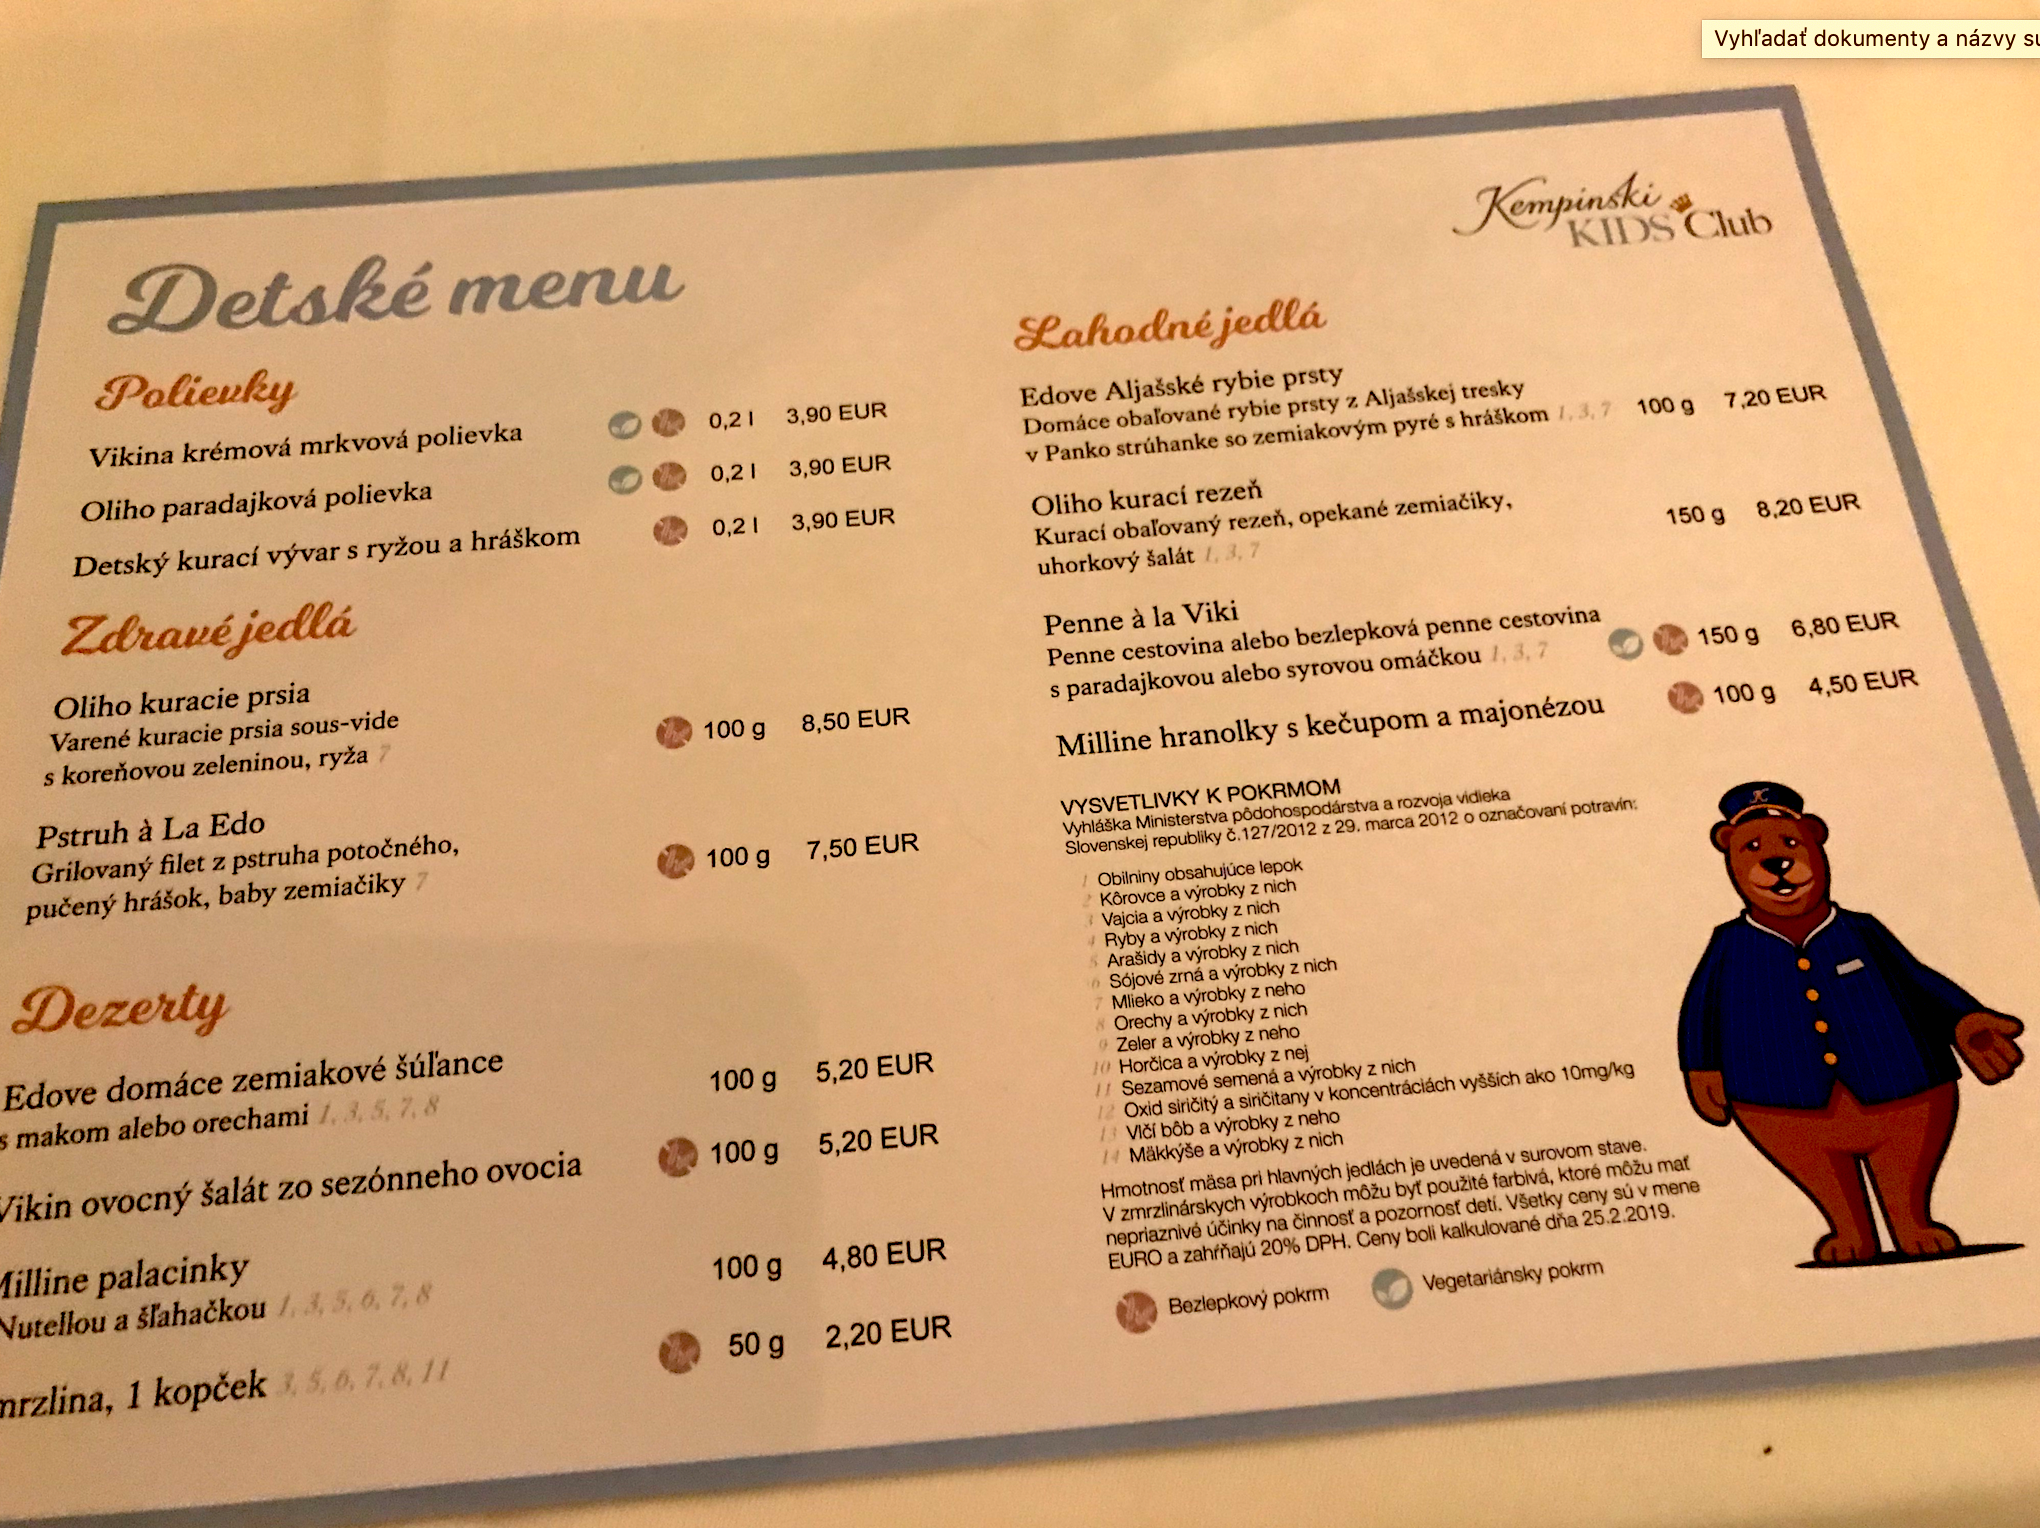 Kempinski – detské menu